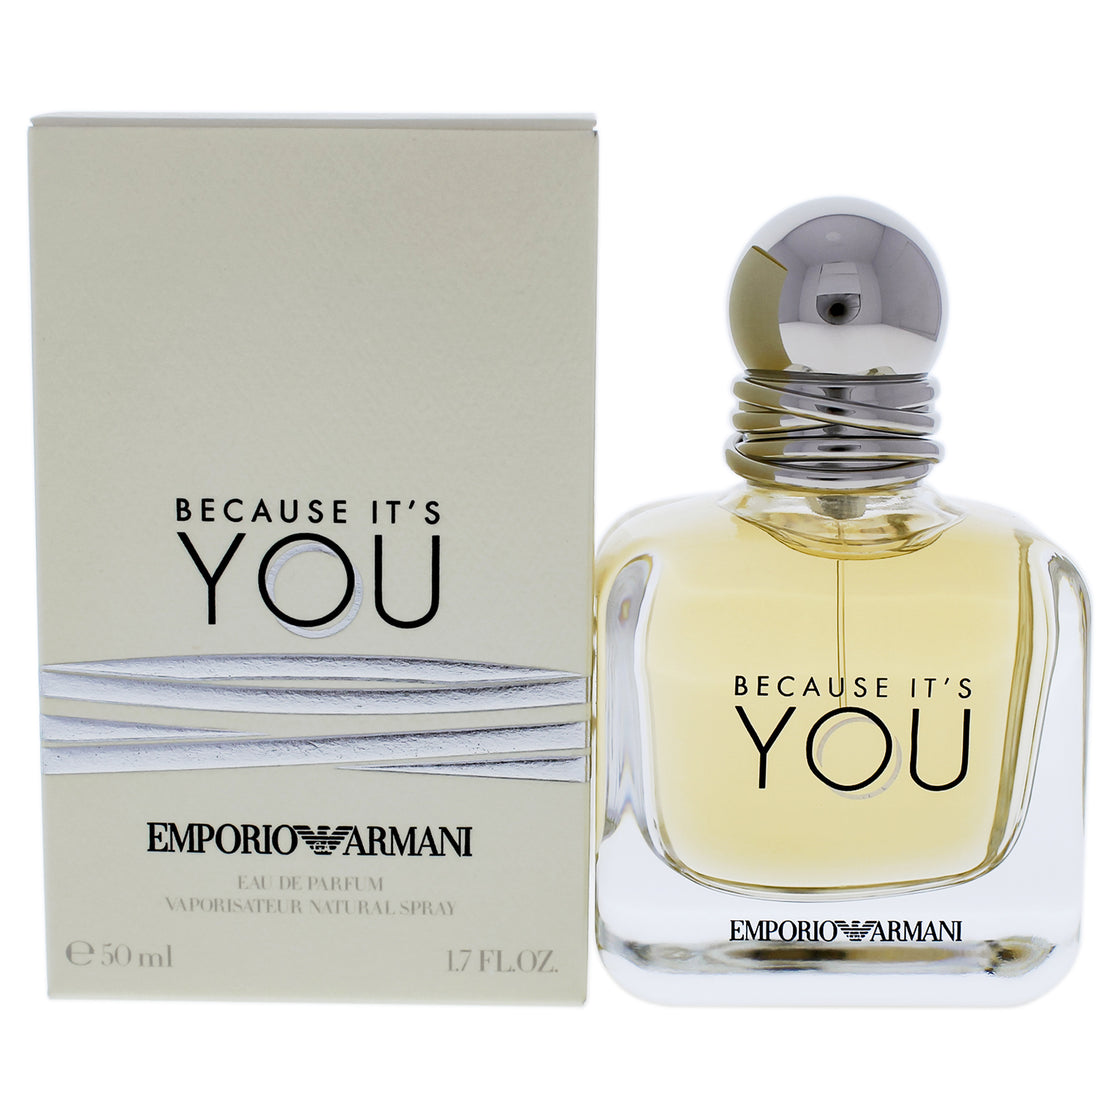 Emporio Armani Because It Is You by Giorgio Armani for Women - 1.7 oz EDP Spray